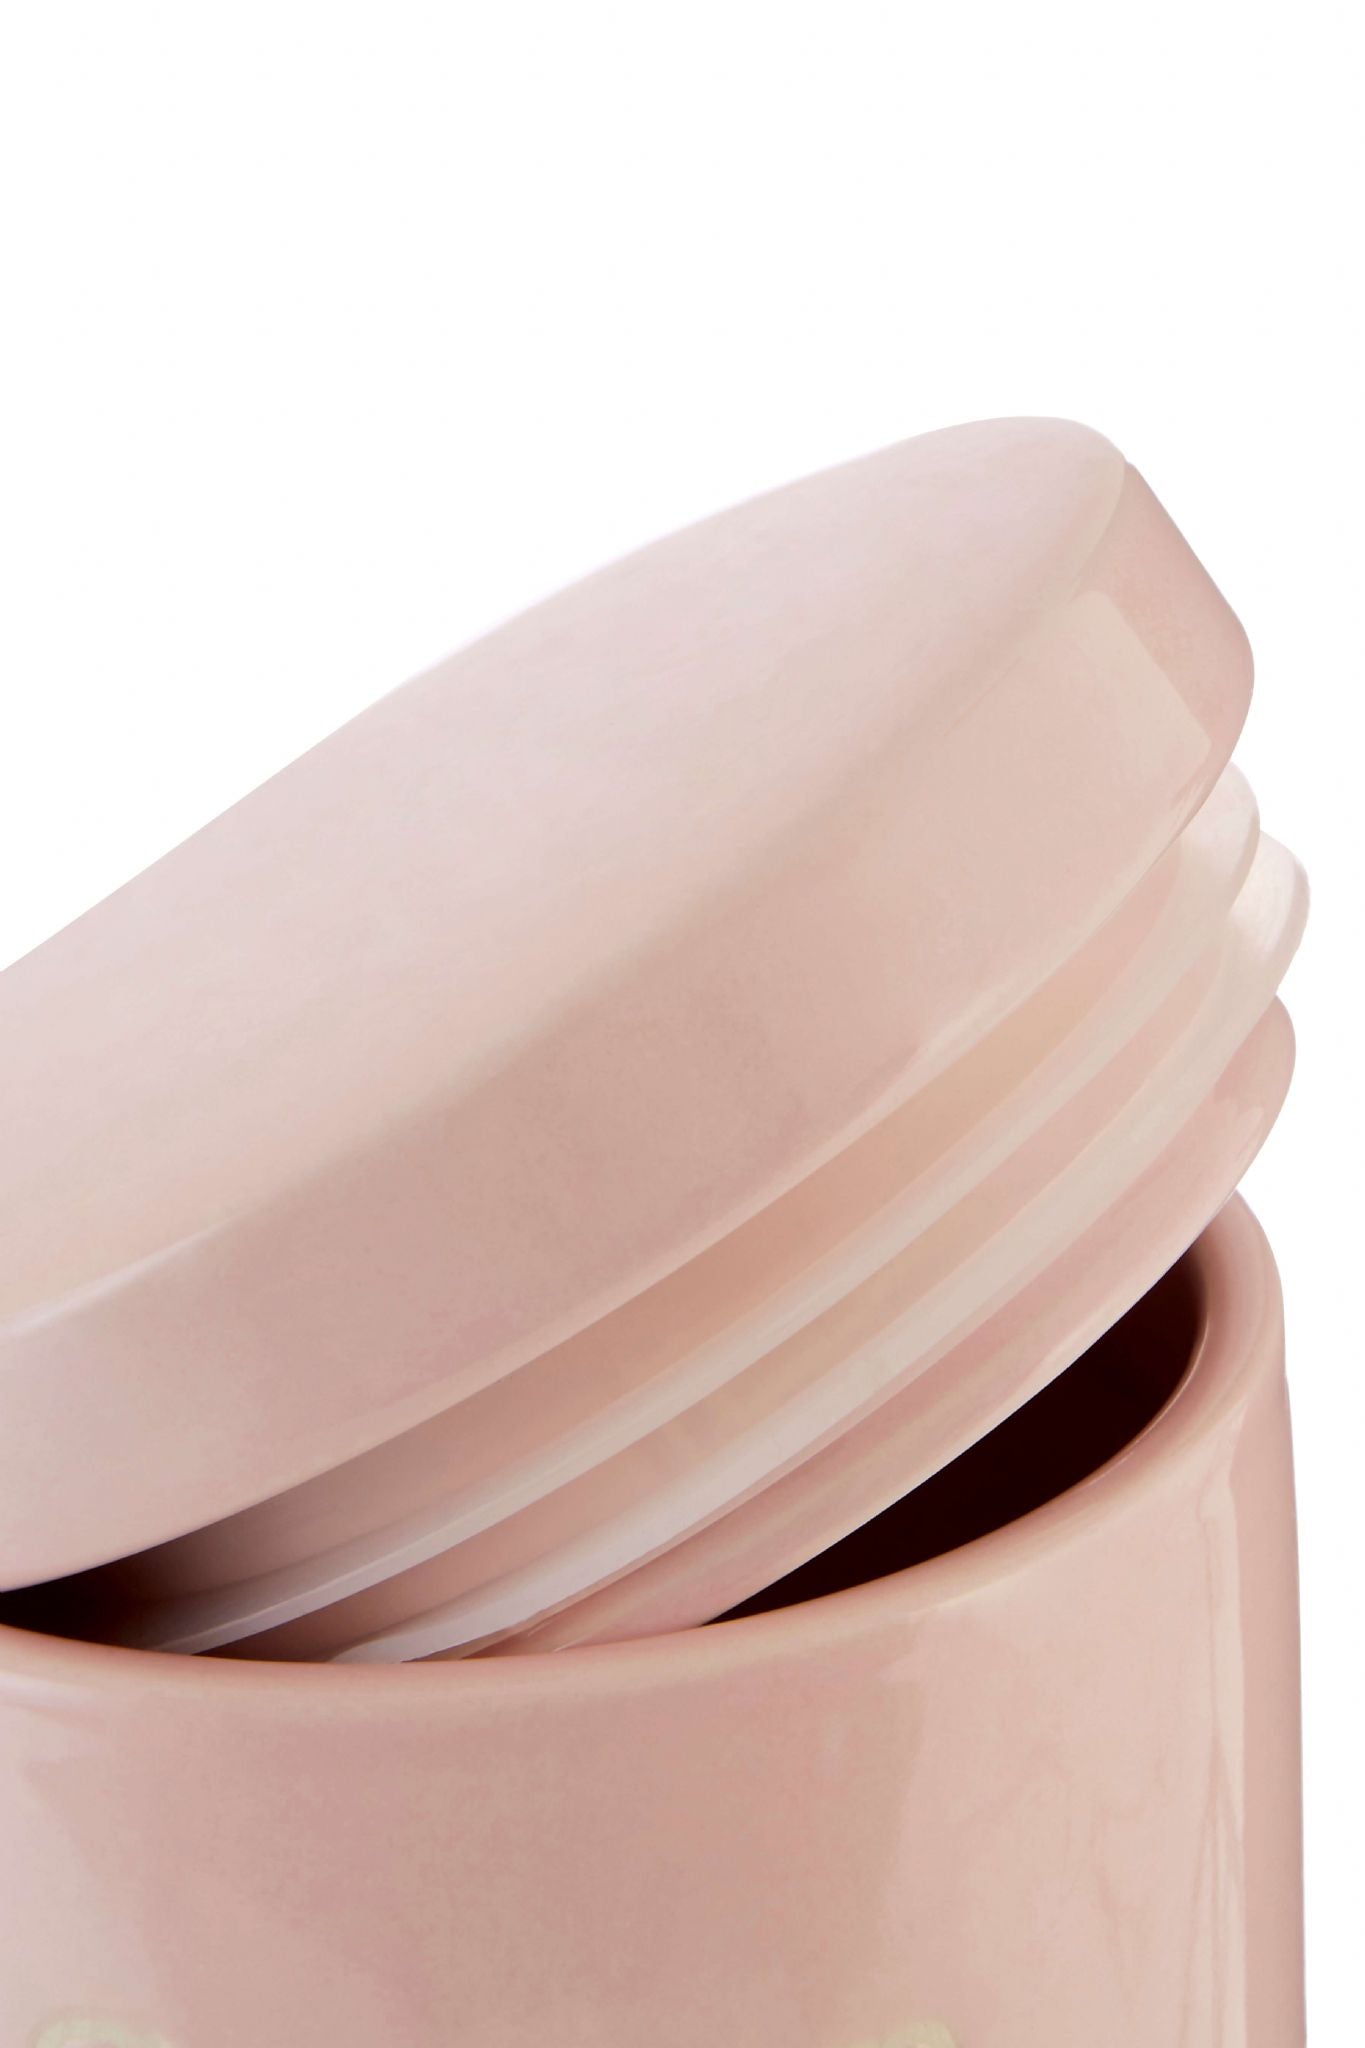 Pastel Pink Tea Canister - Outlet - Save 20%